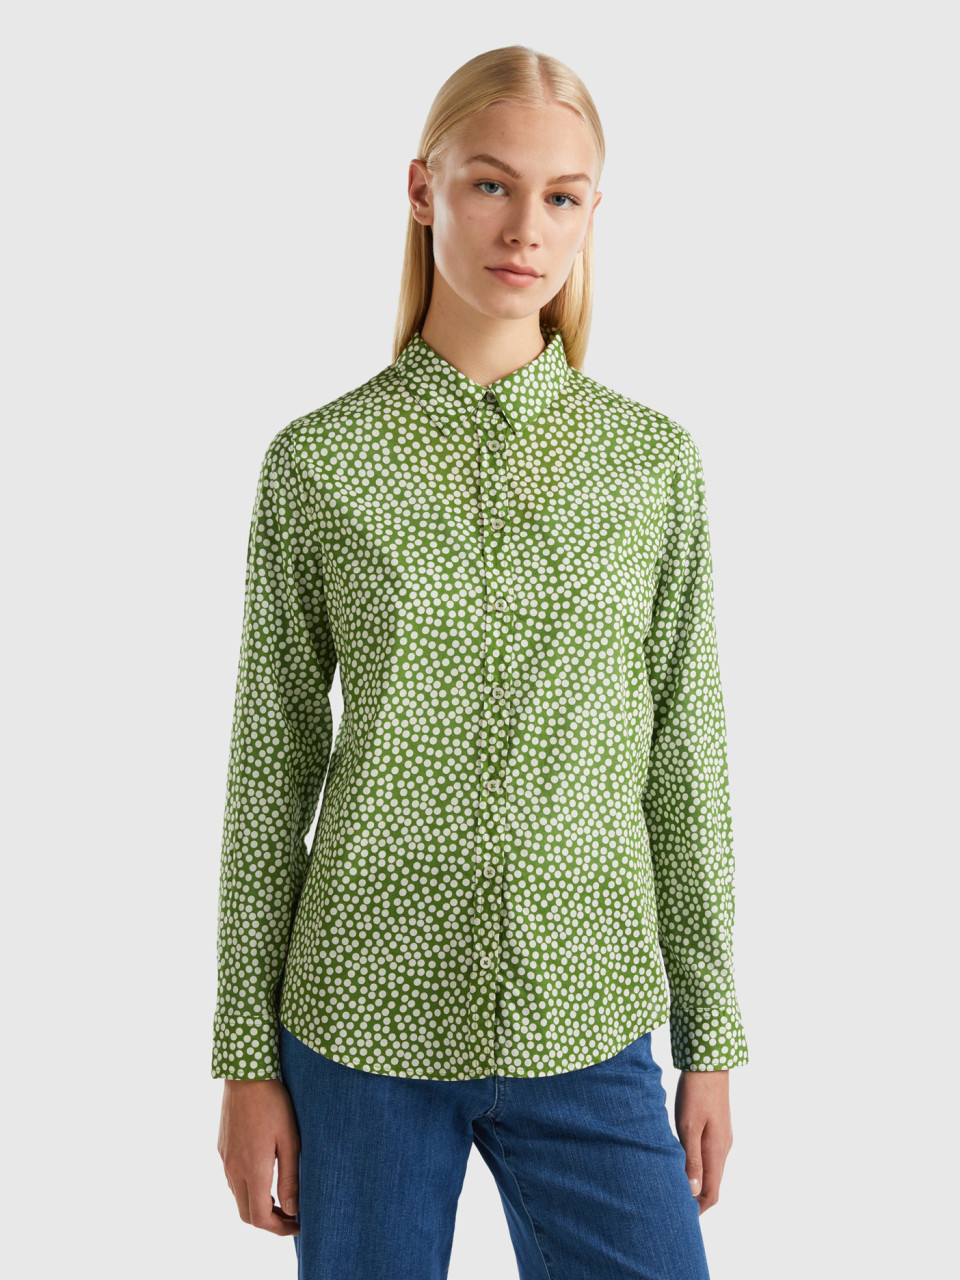 Benetton, Green Shirt With White Polka Dots, Green, Women